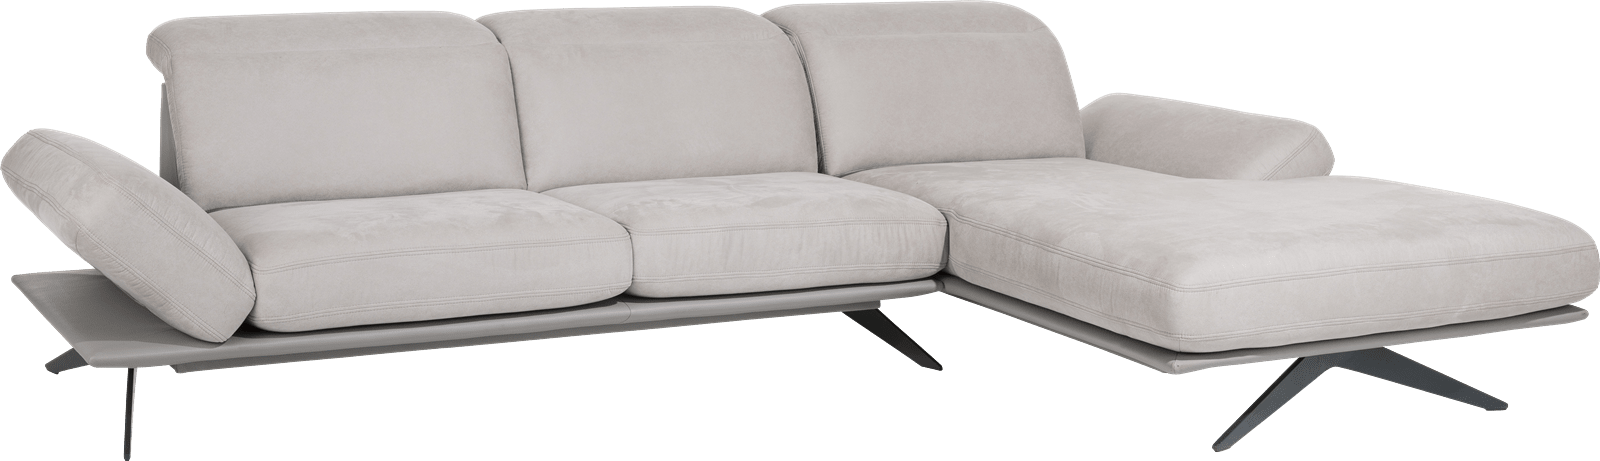 XOOON - Paxos - Minimalistisches Design - Sofas - 3-Sitzer Armlehne links